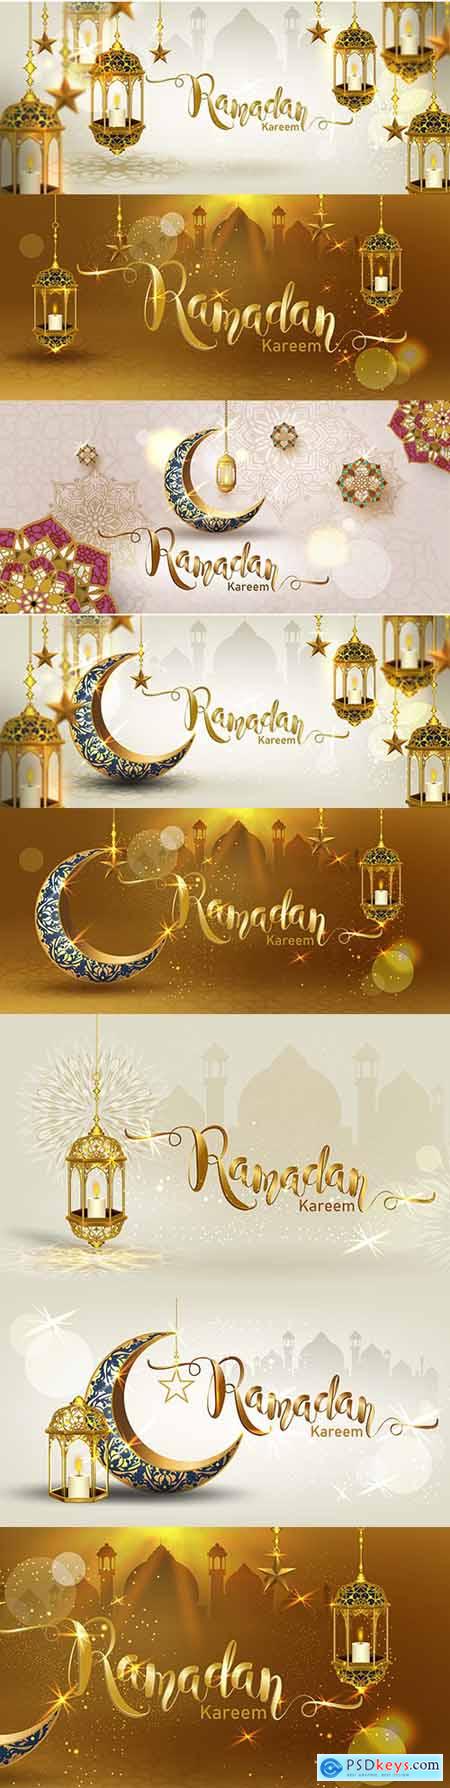 Ramadan Kareem with golden crescent Islamic decorative template